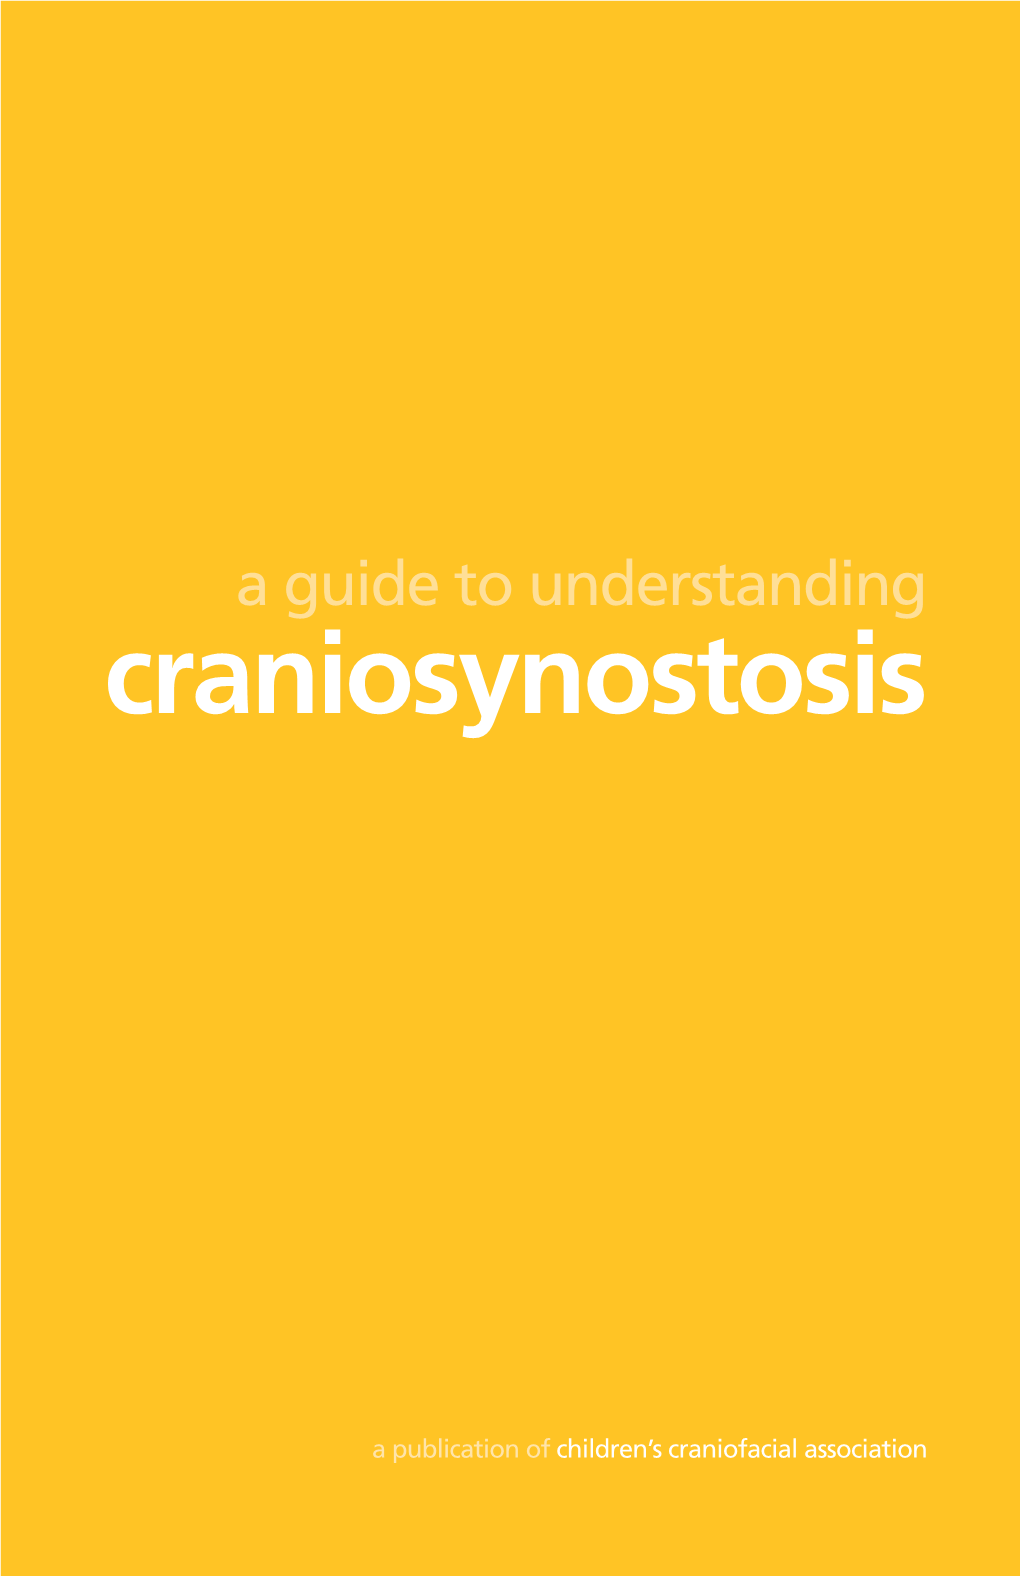 A Guide to Understanding Craniosynostosis